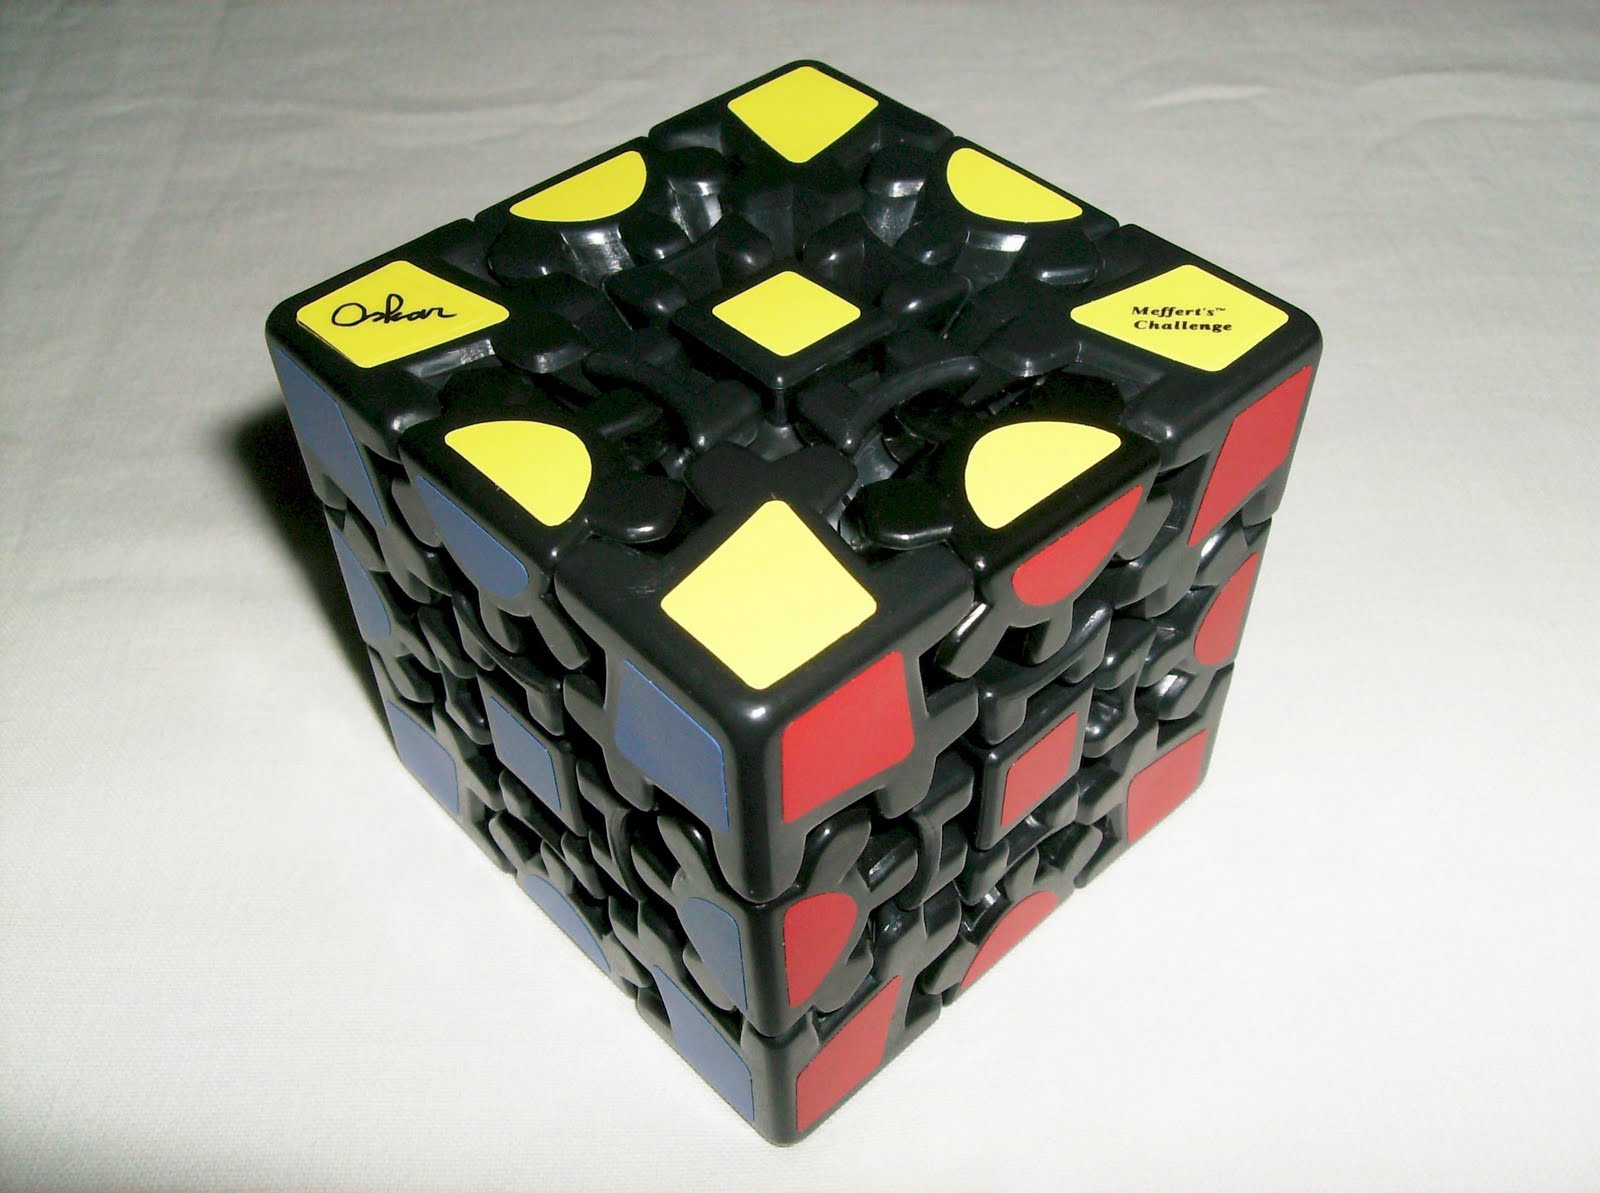 gabriel-fernandes-puzzle-collection-gear-cube